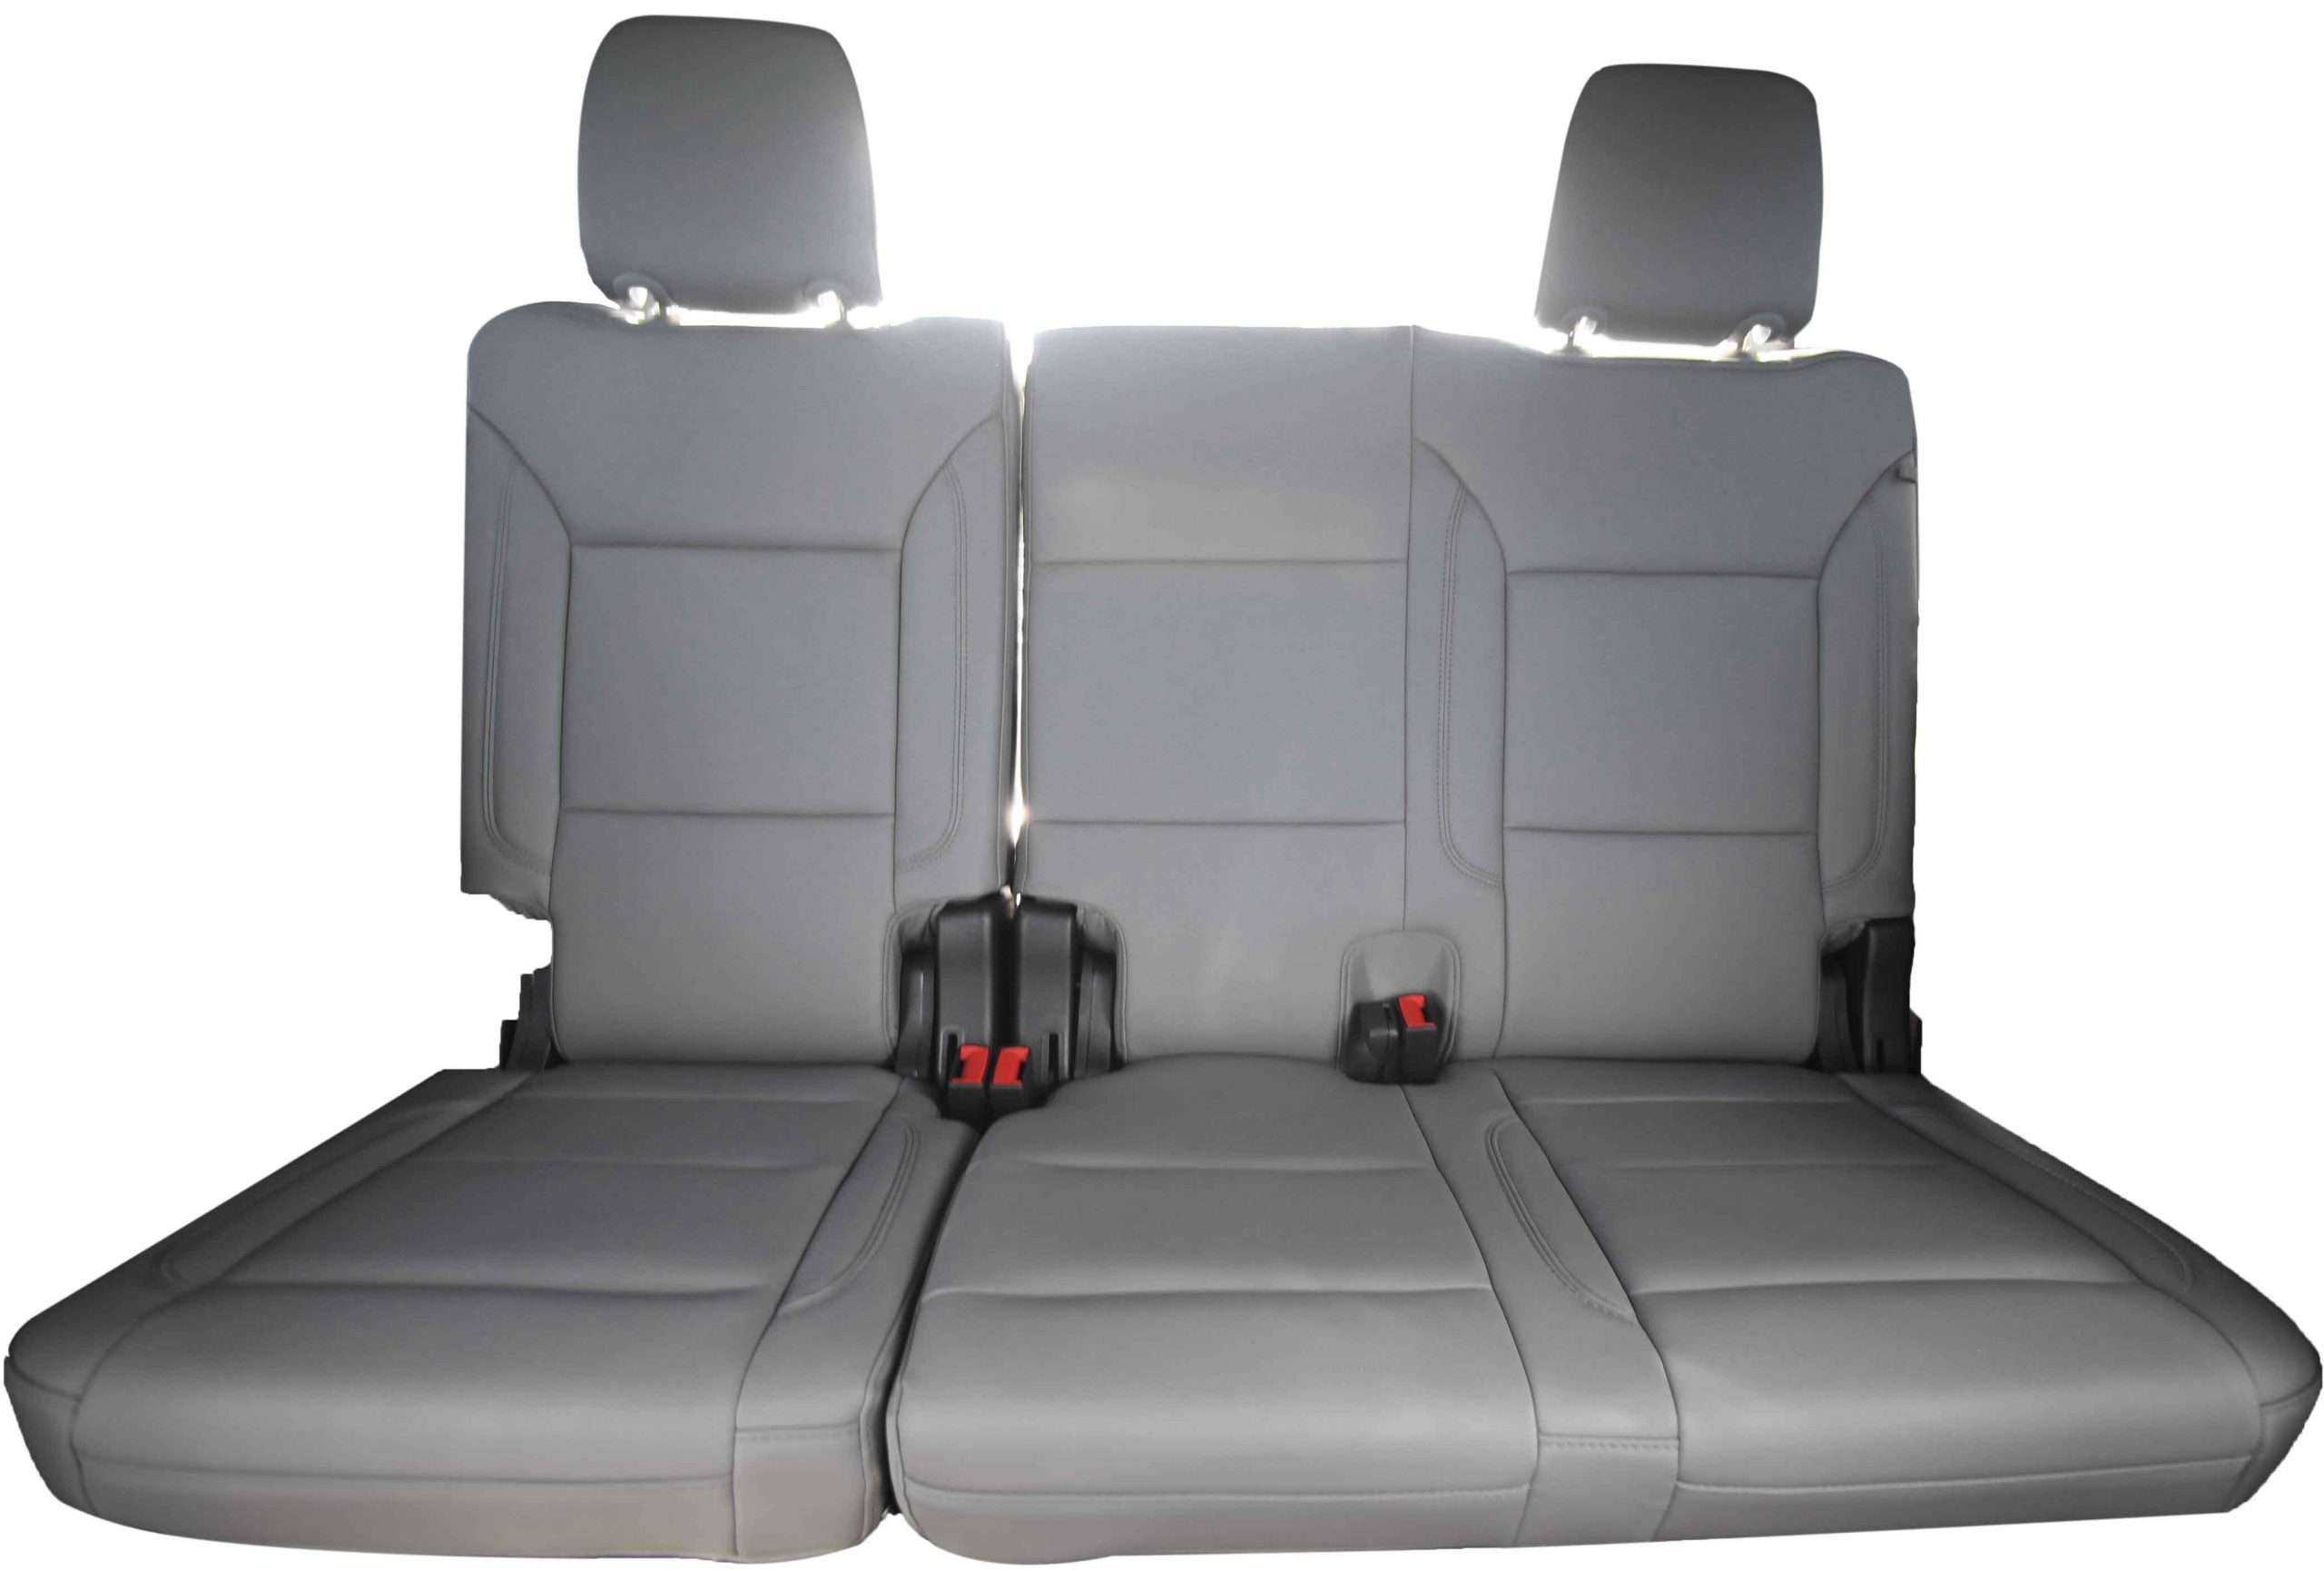 Tahoe Yukon Suburban Custom Seat Covers Westerner - Gmc Denali Car Seat Covers